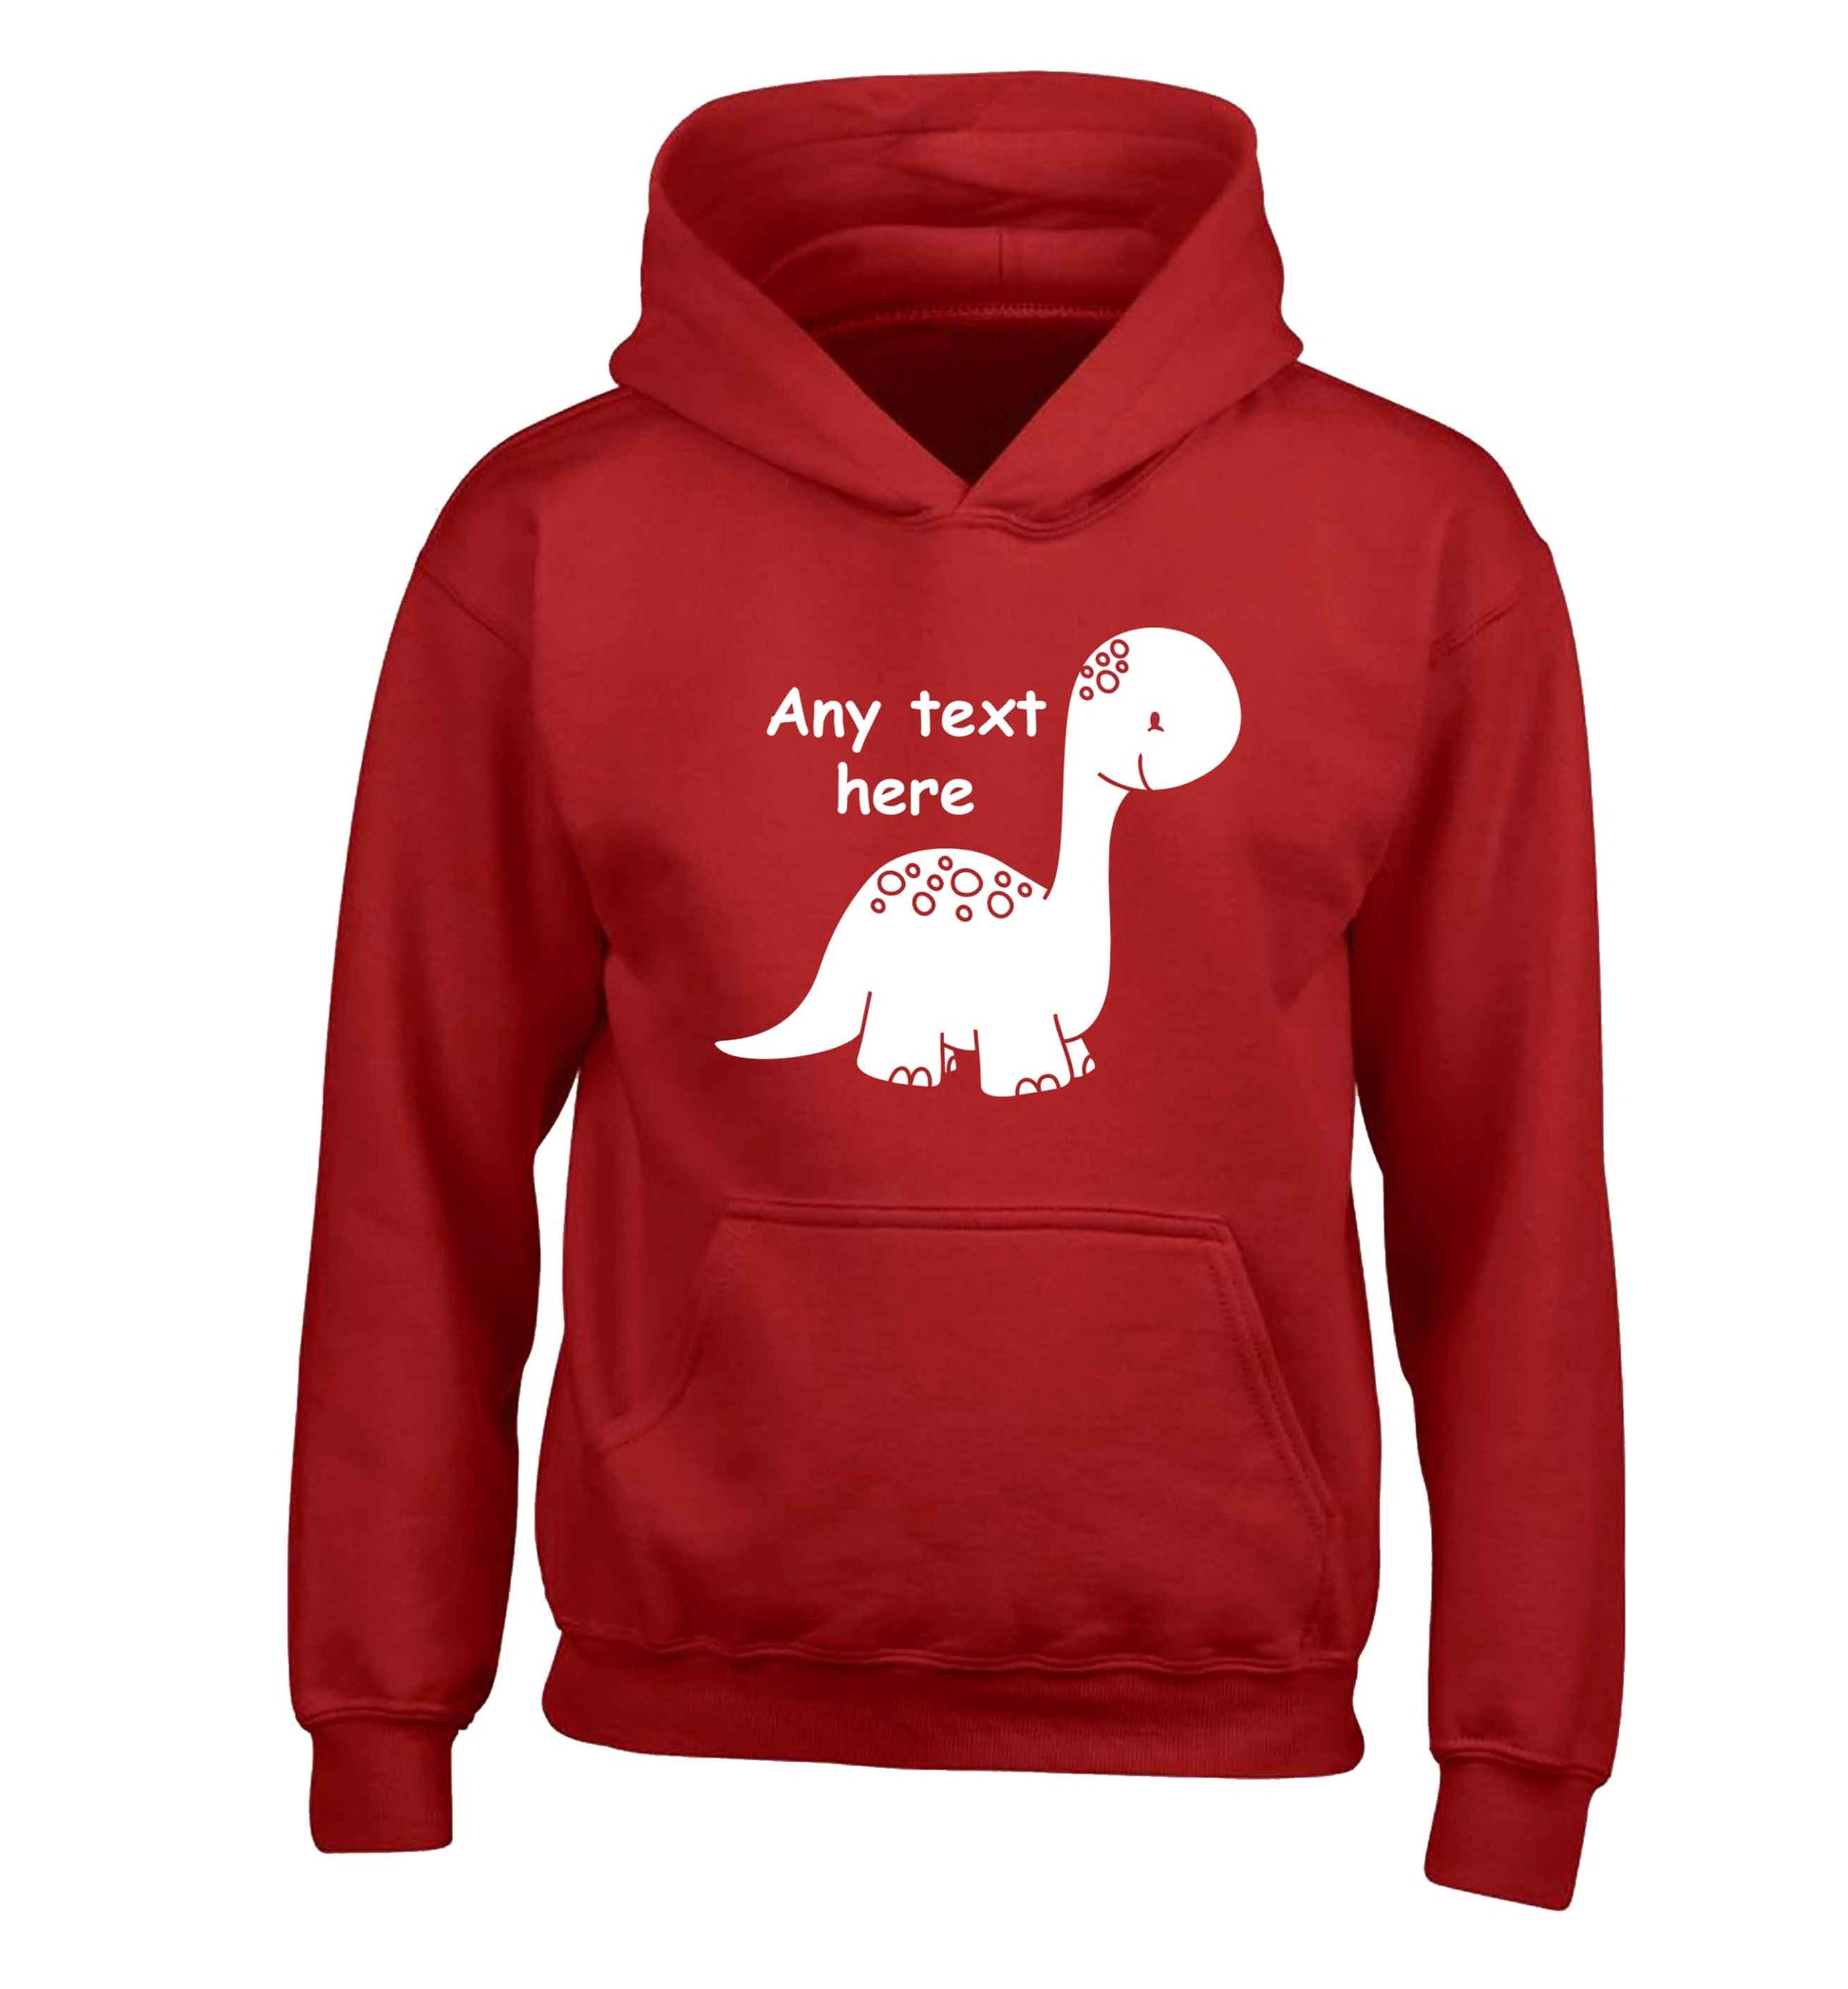 Dinosaur any text children's red hoodie 12-13 Years